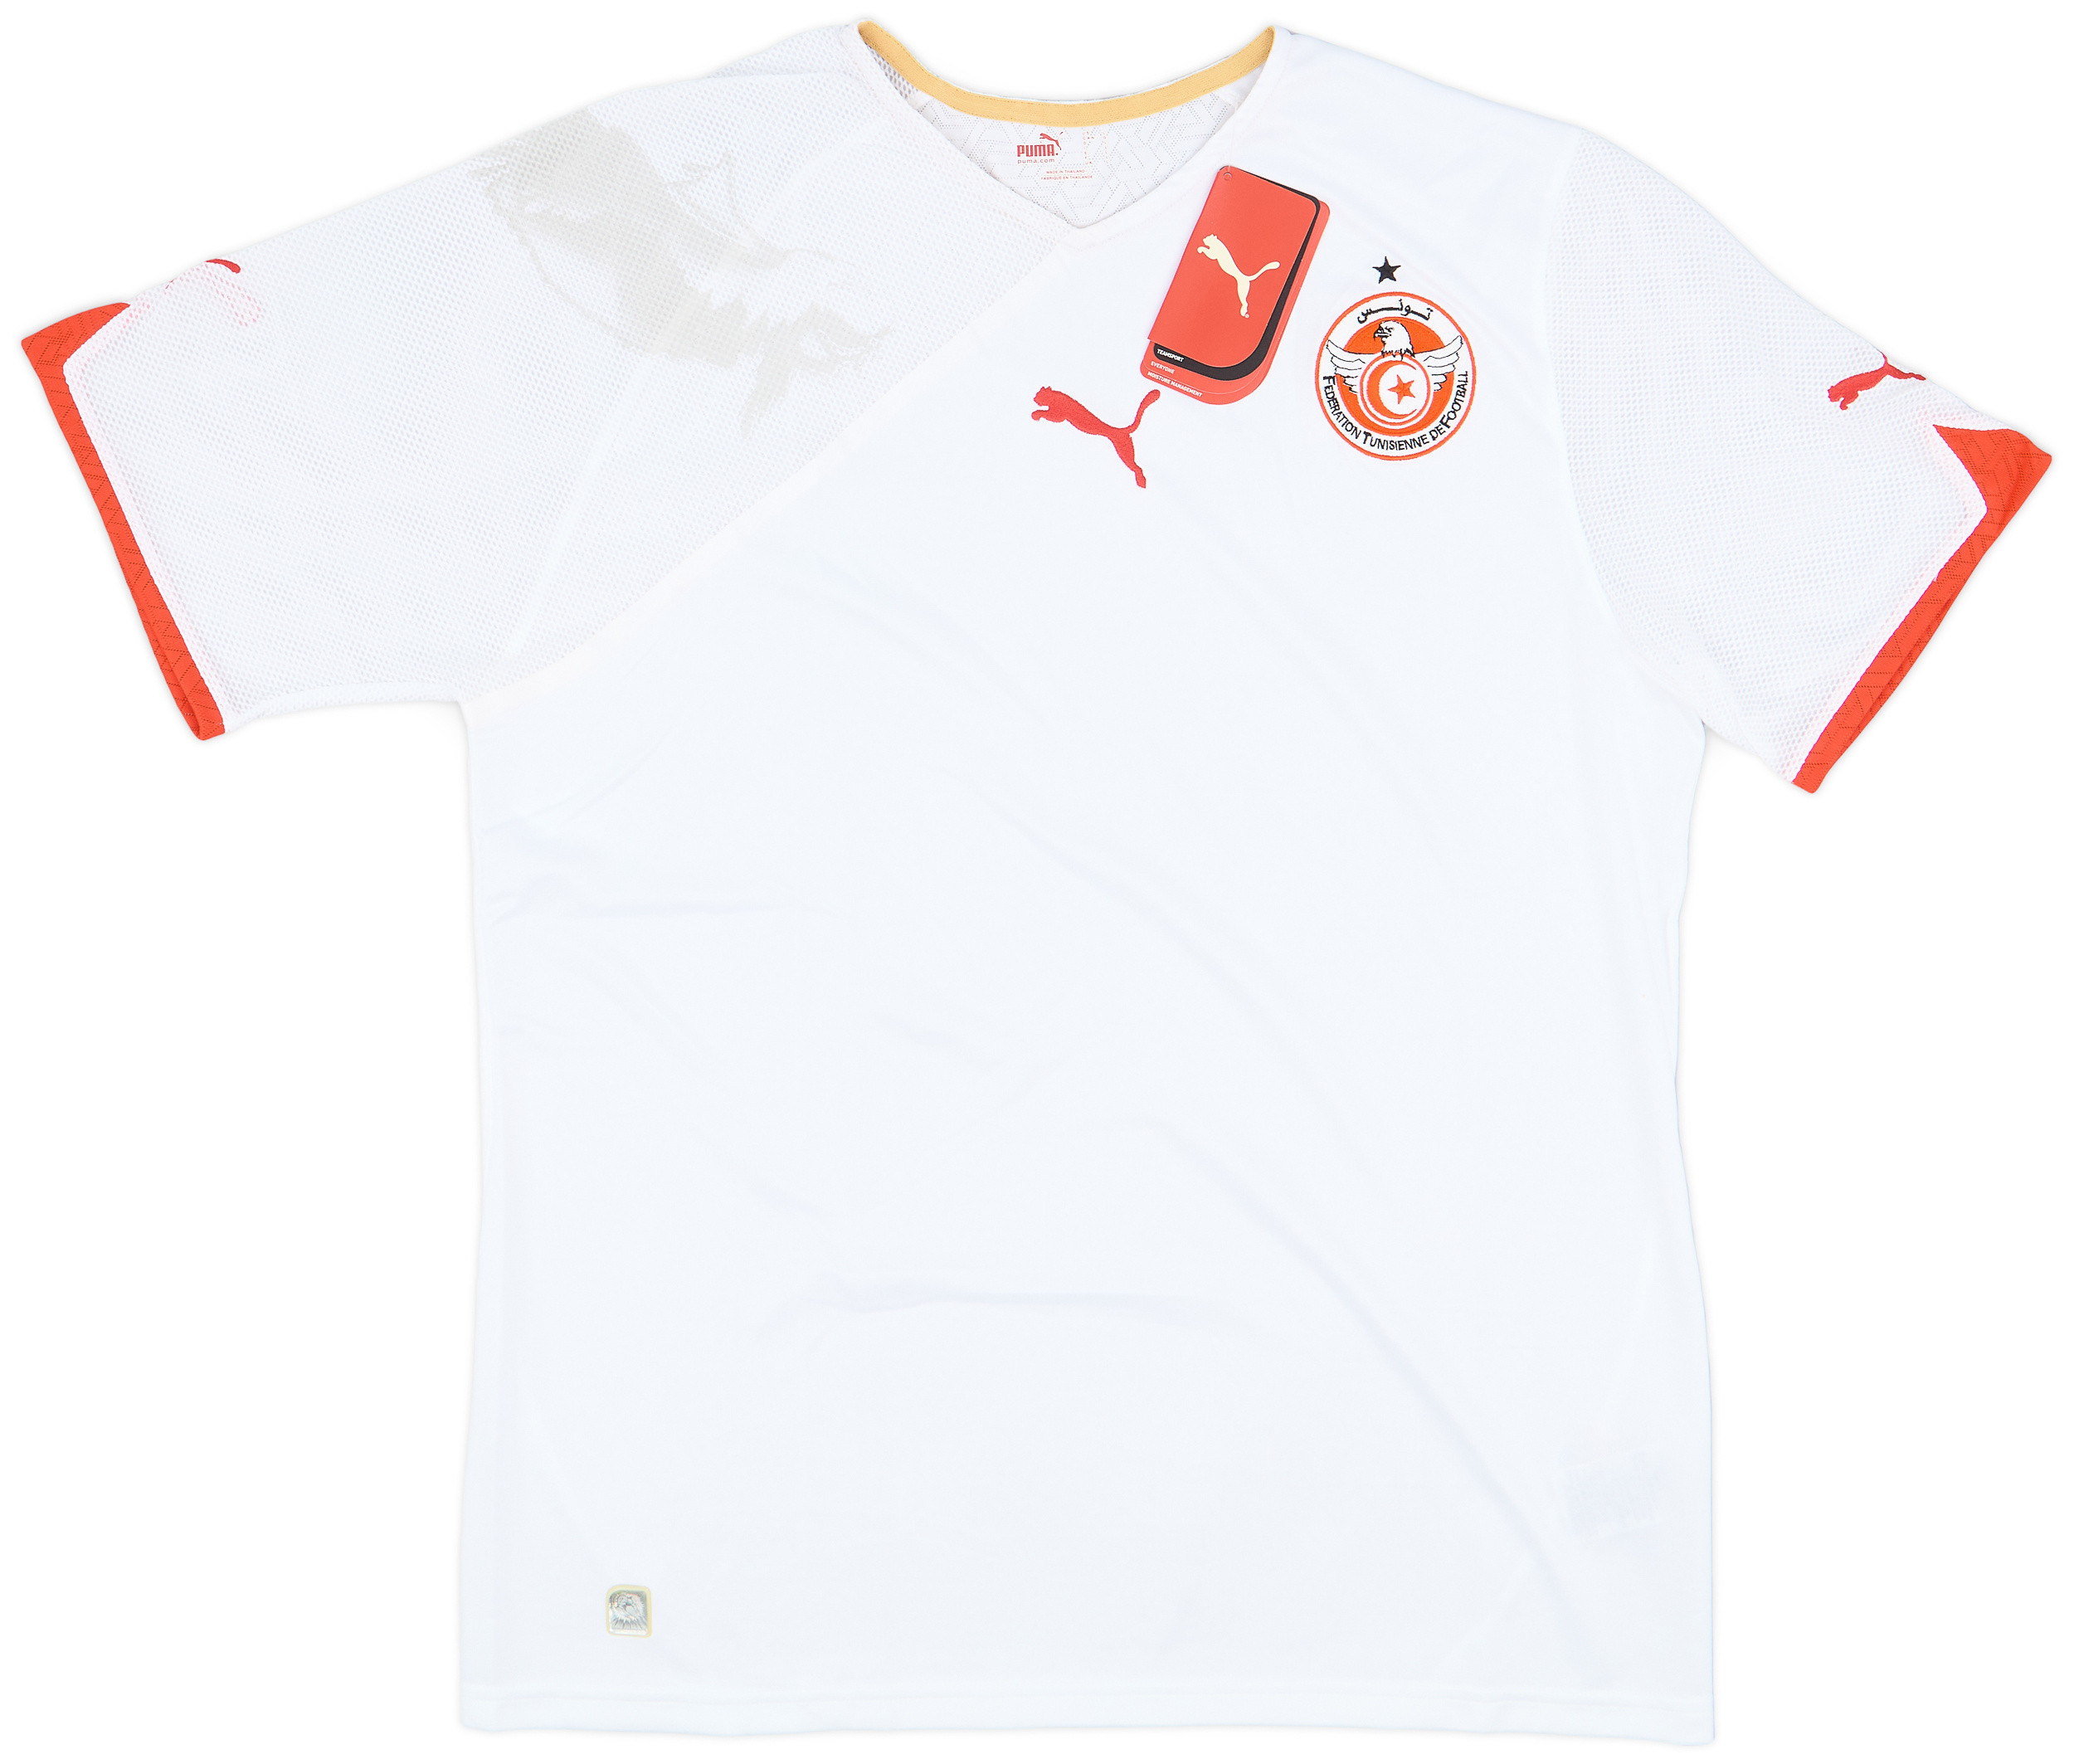 Retro Tunisia Shirt